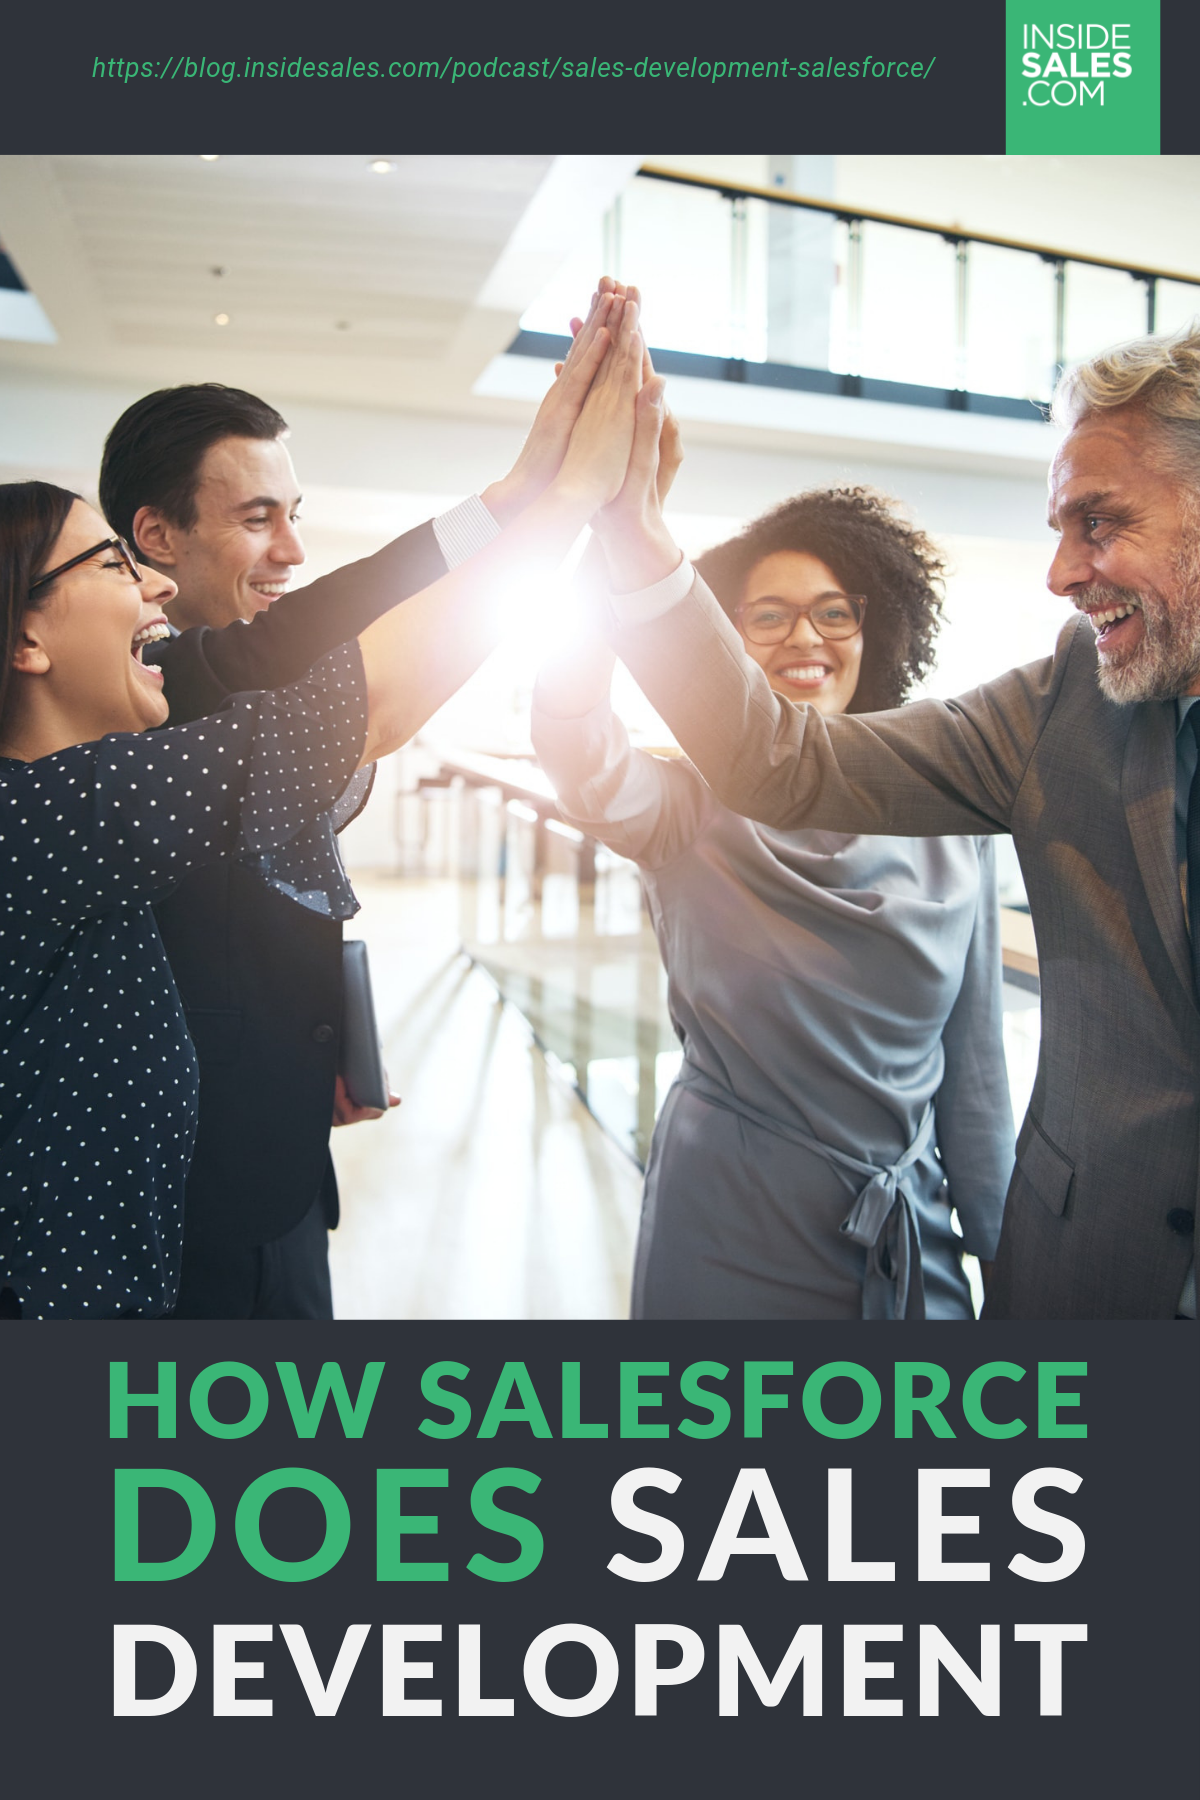 How Salesforce Does Sales Development https://www.insidesales.com/blog/podcast/sales-development-salesforce/